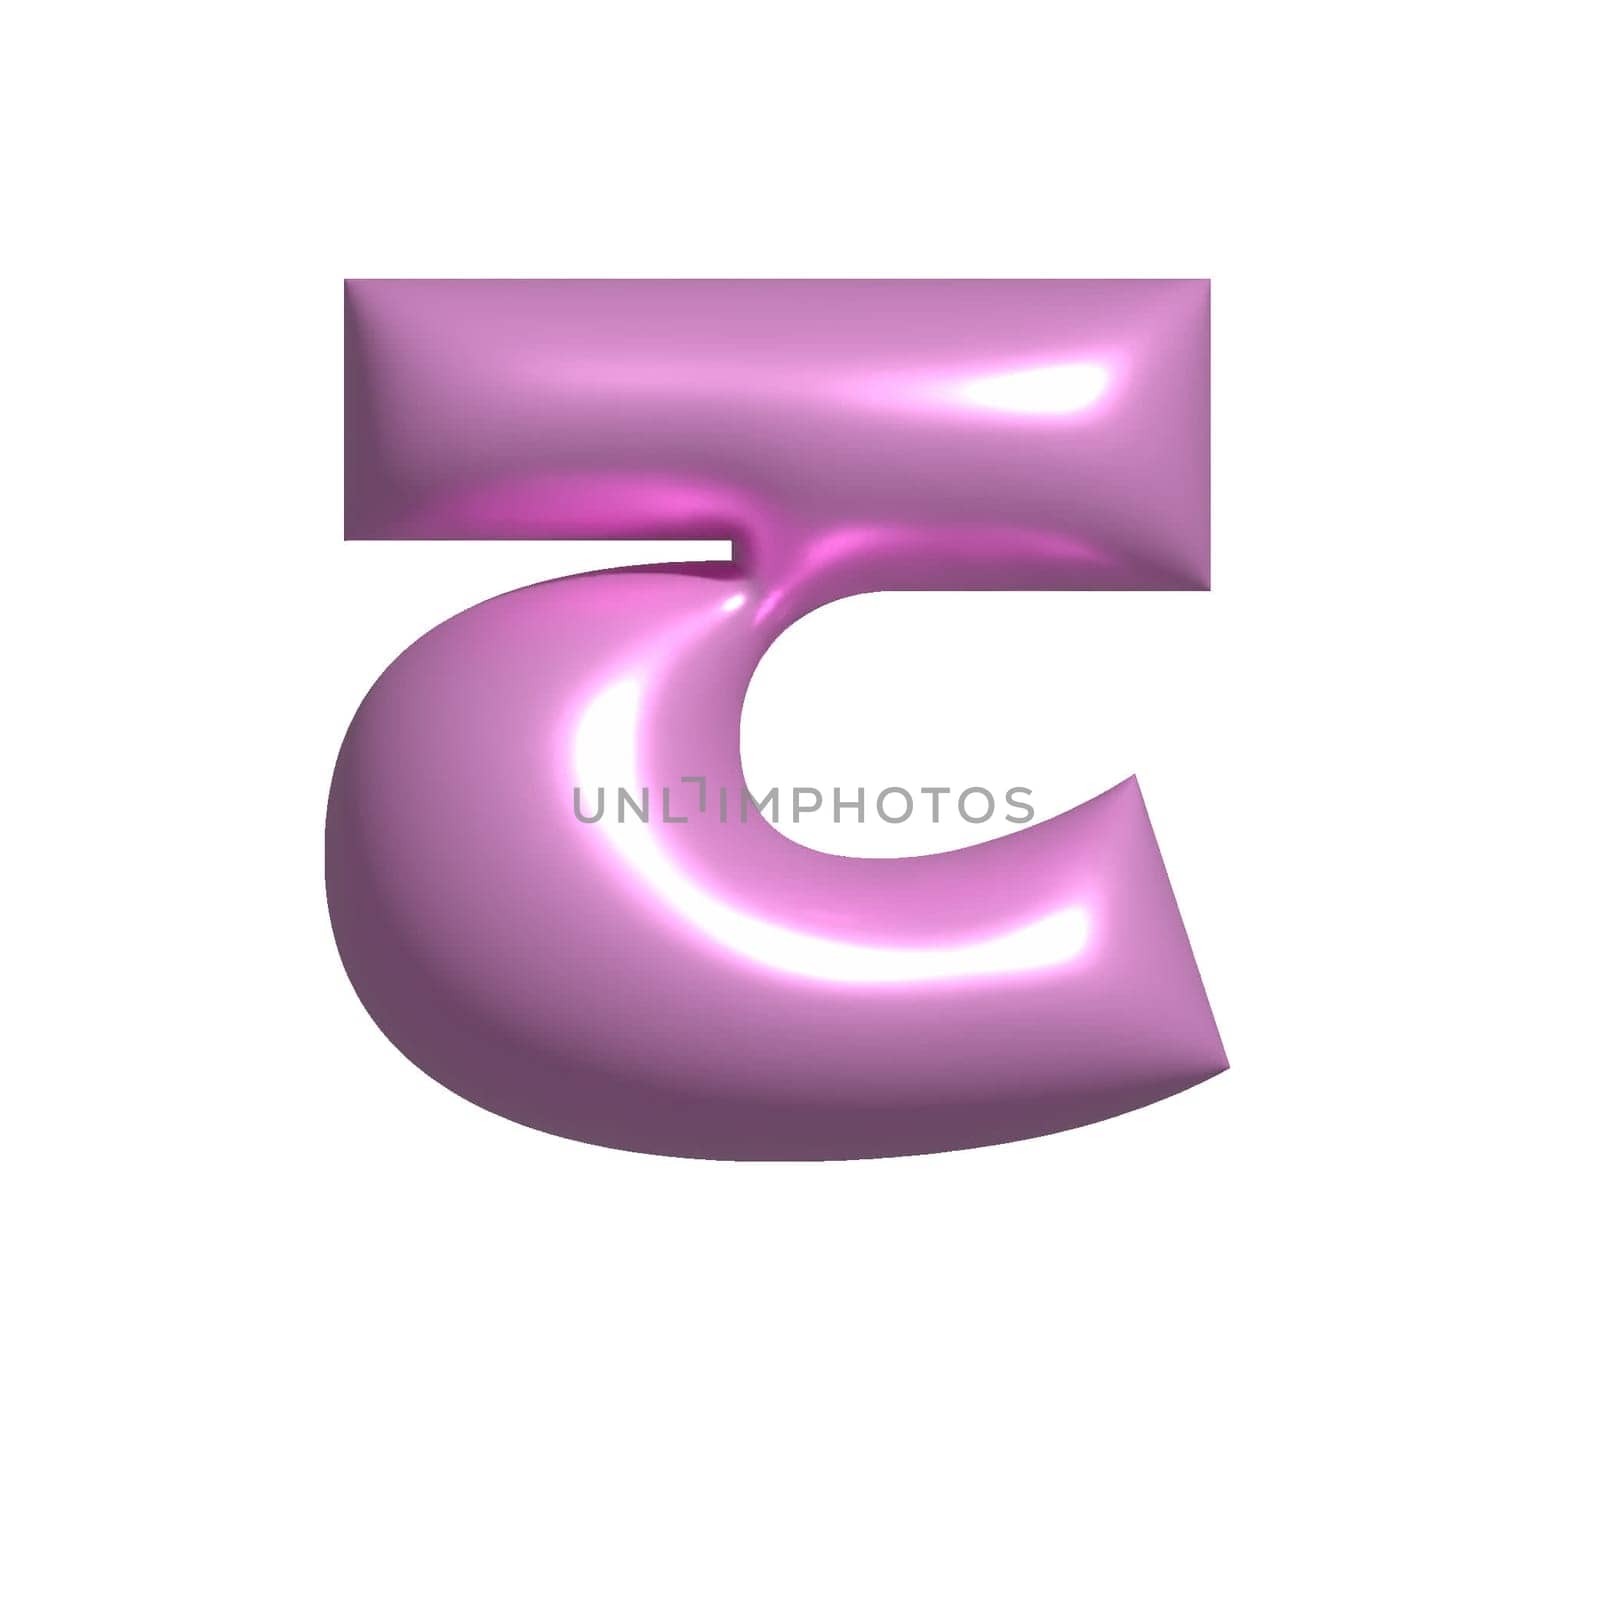 Pink shiny metal shiny reflective letter G 3D illustration